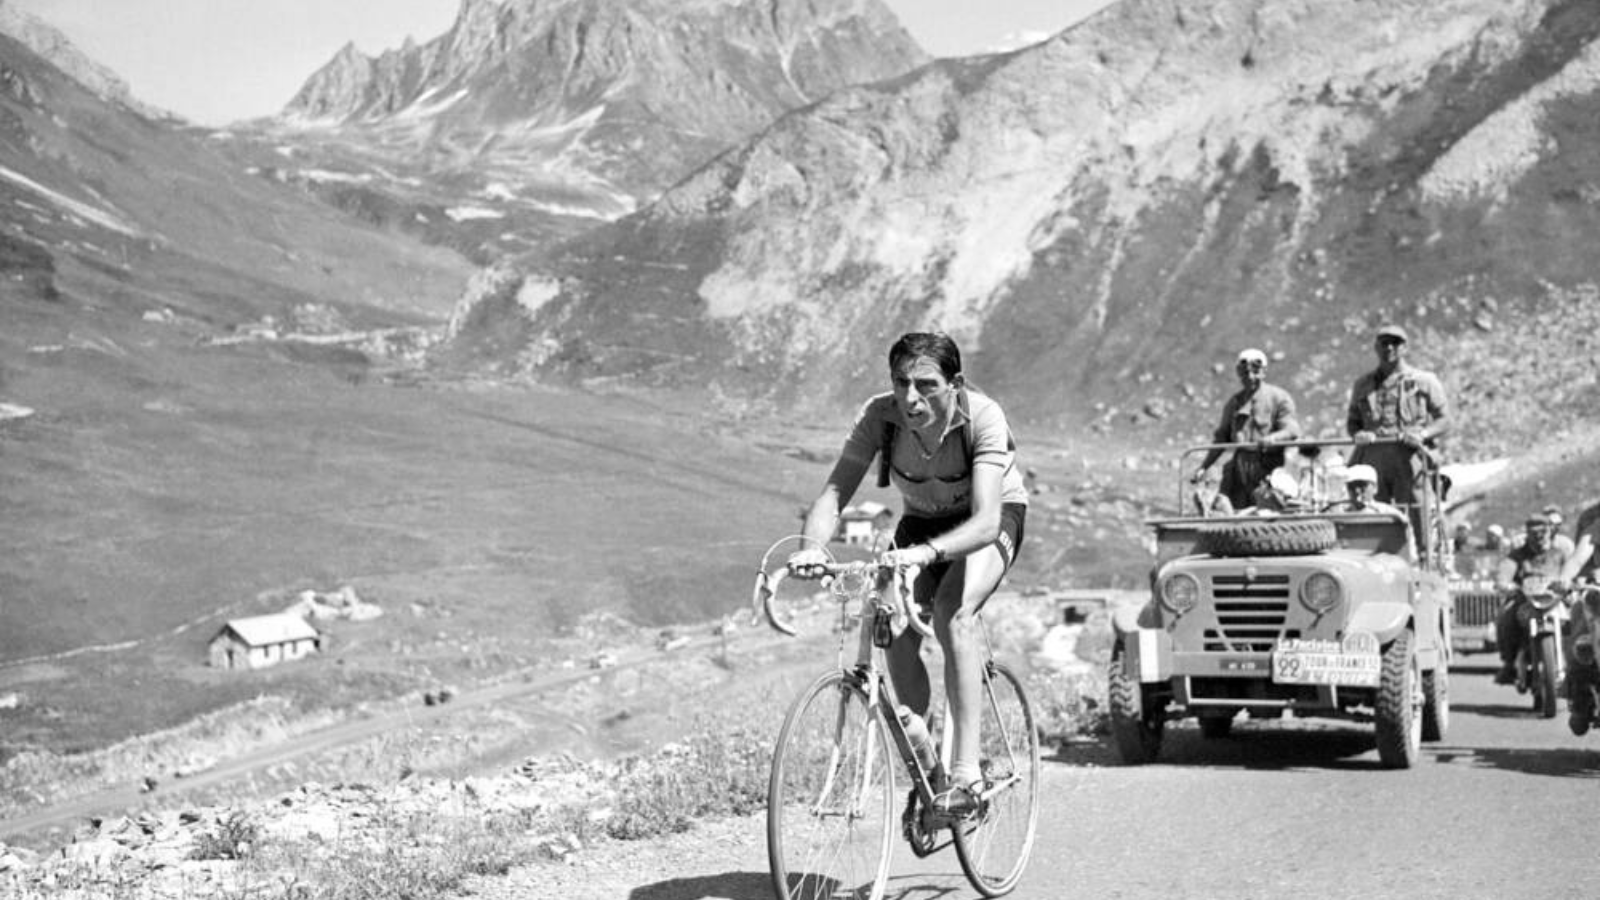 Fausto Coppi at the Tour de France 1952